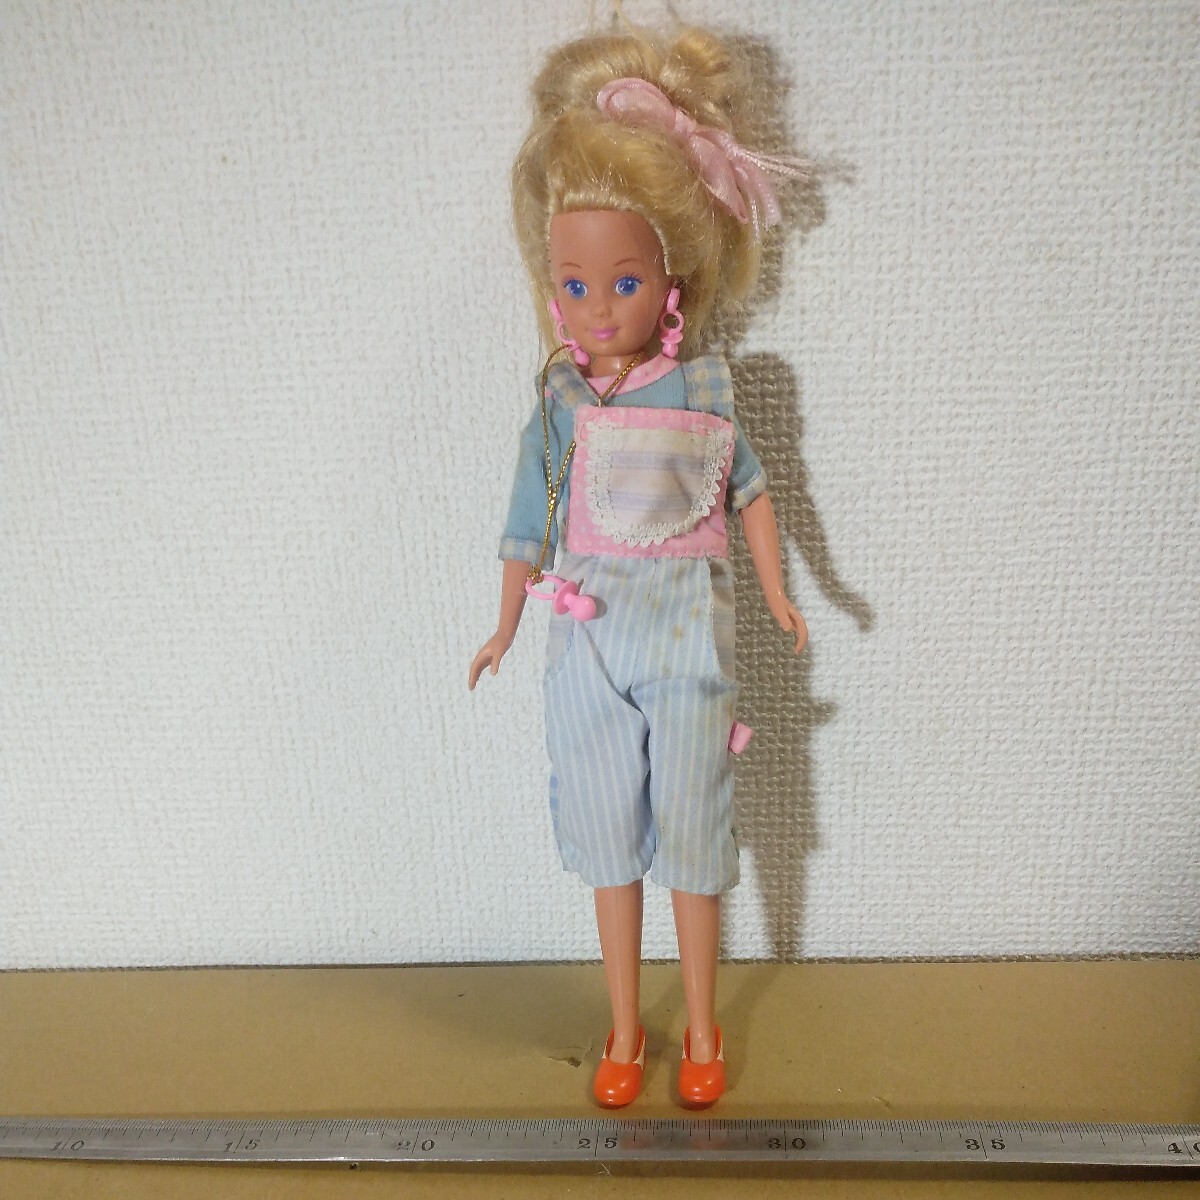 Barbie バービー 妹 ヘアーあそび スキッパー 着せ替え人形 ドール マテル社 1987 マレーシア製 未チェック 詳細不明 ジャンク扱い 欠品_画像1